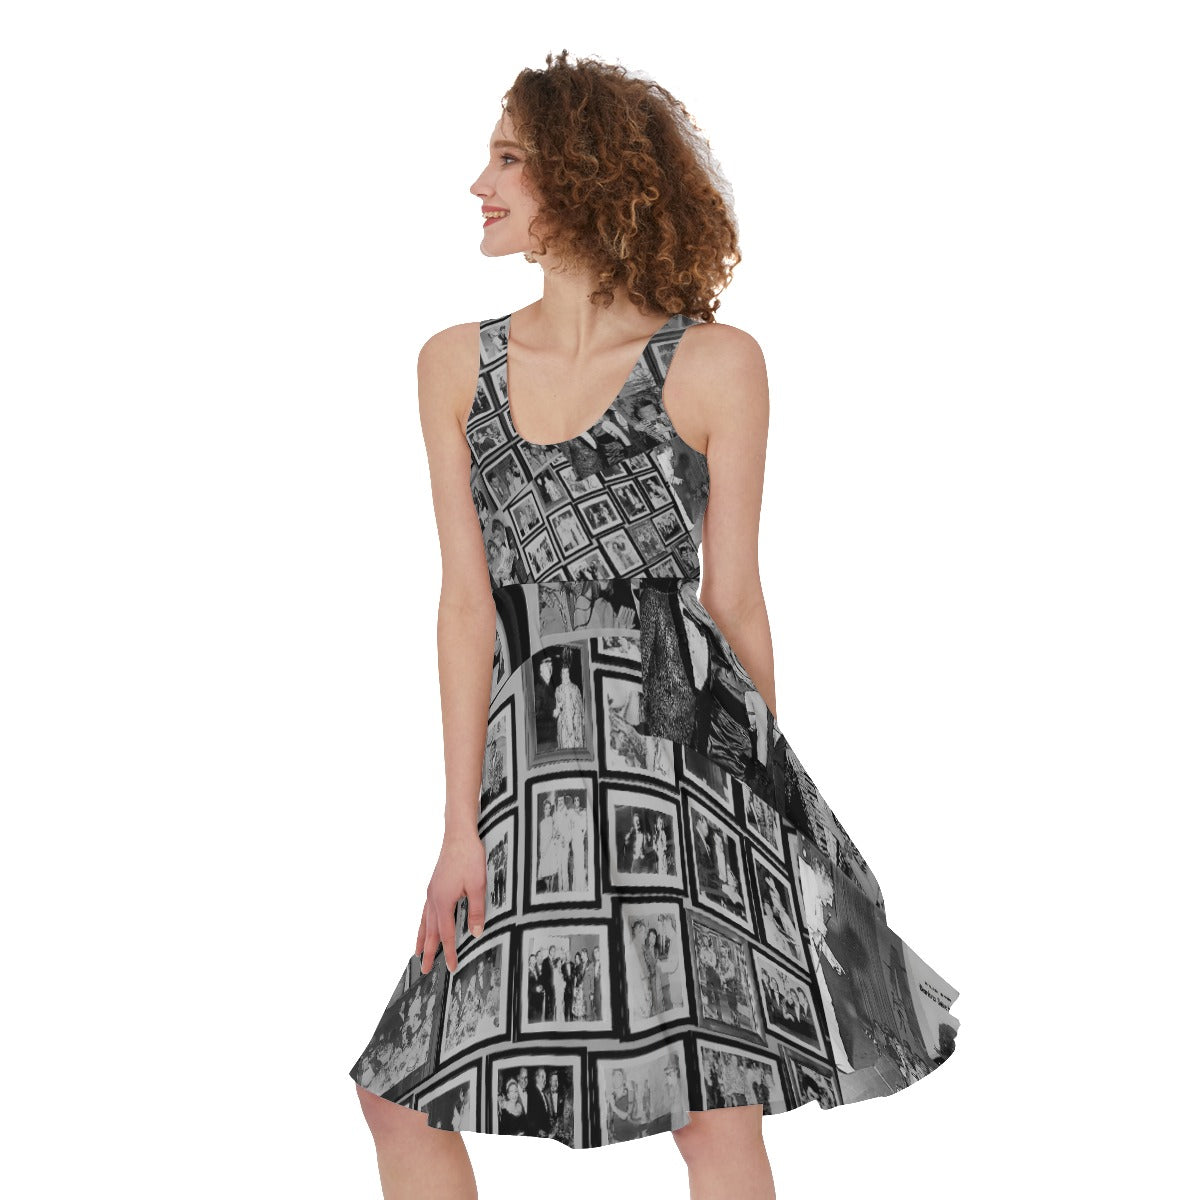 Liberace Friendship Mosaic Print Dress